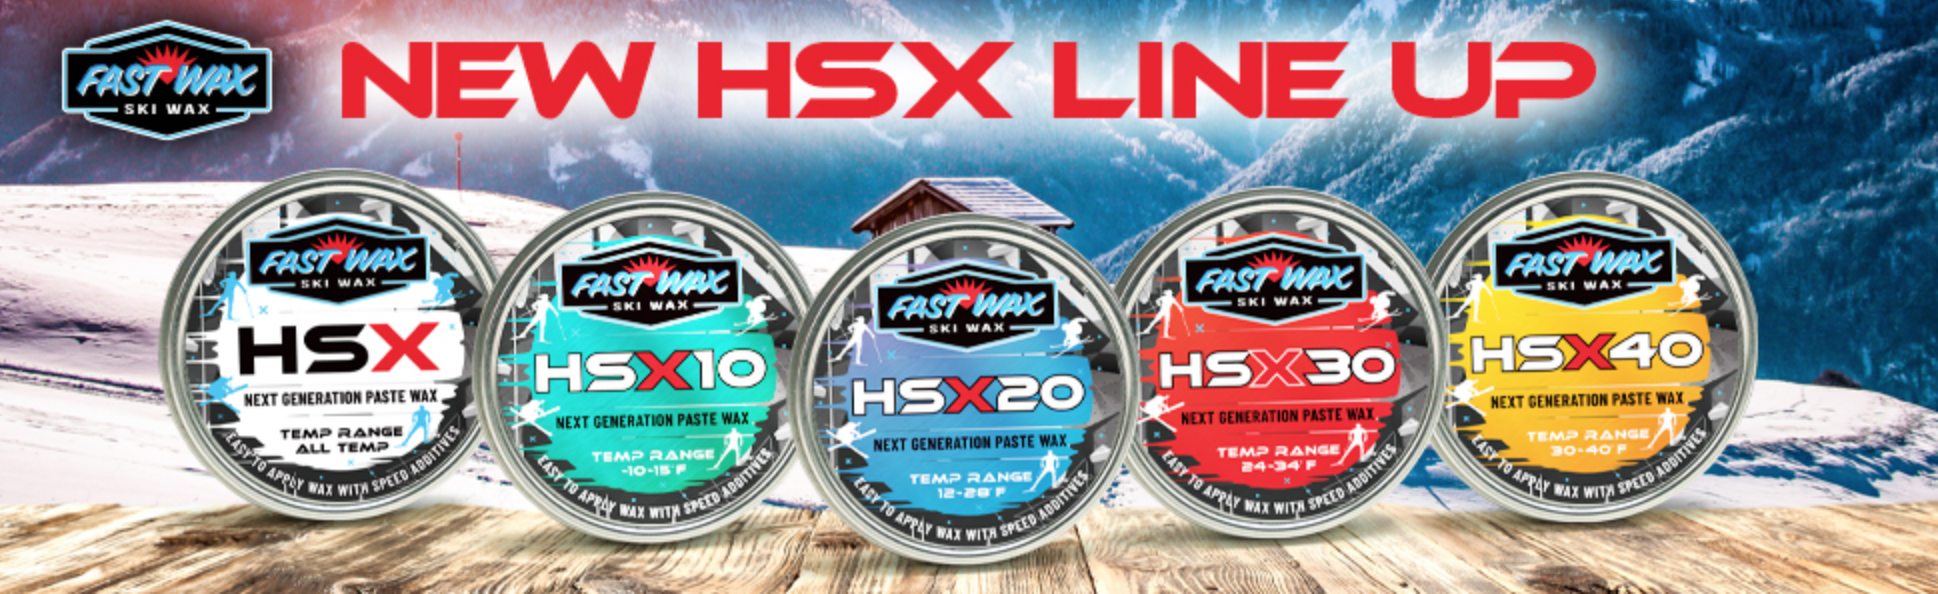 wenselijk toxiciteit rijk Fast Wax HSX 10,20,30 Paste Wax 60g, Buy all and SAVE! - World Cup Ski Shop